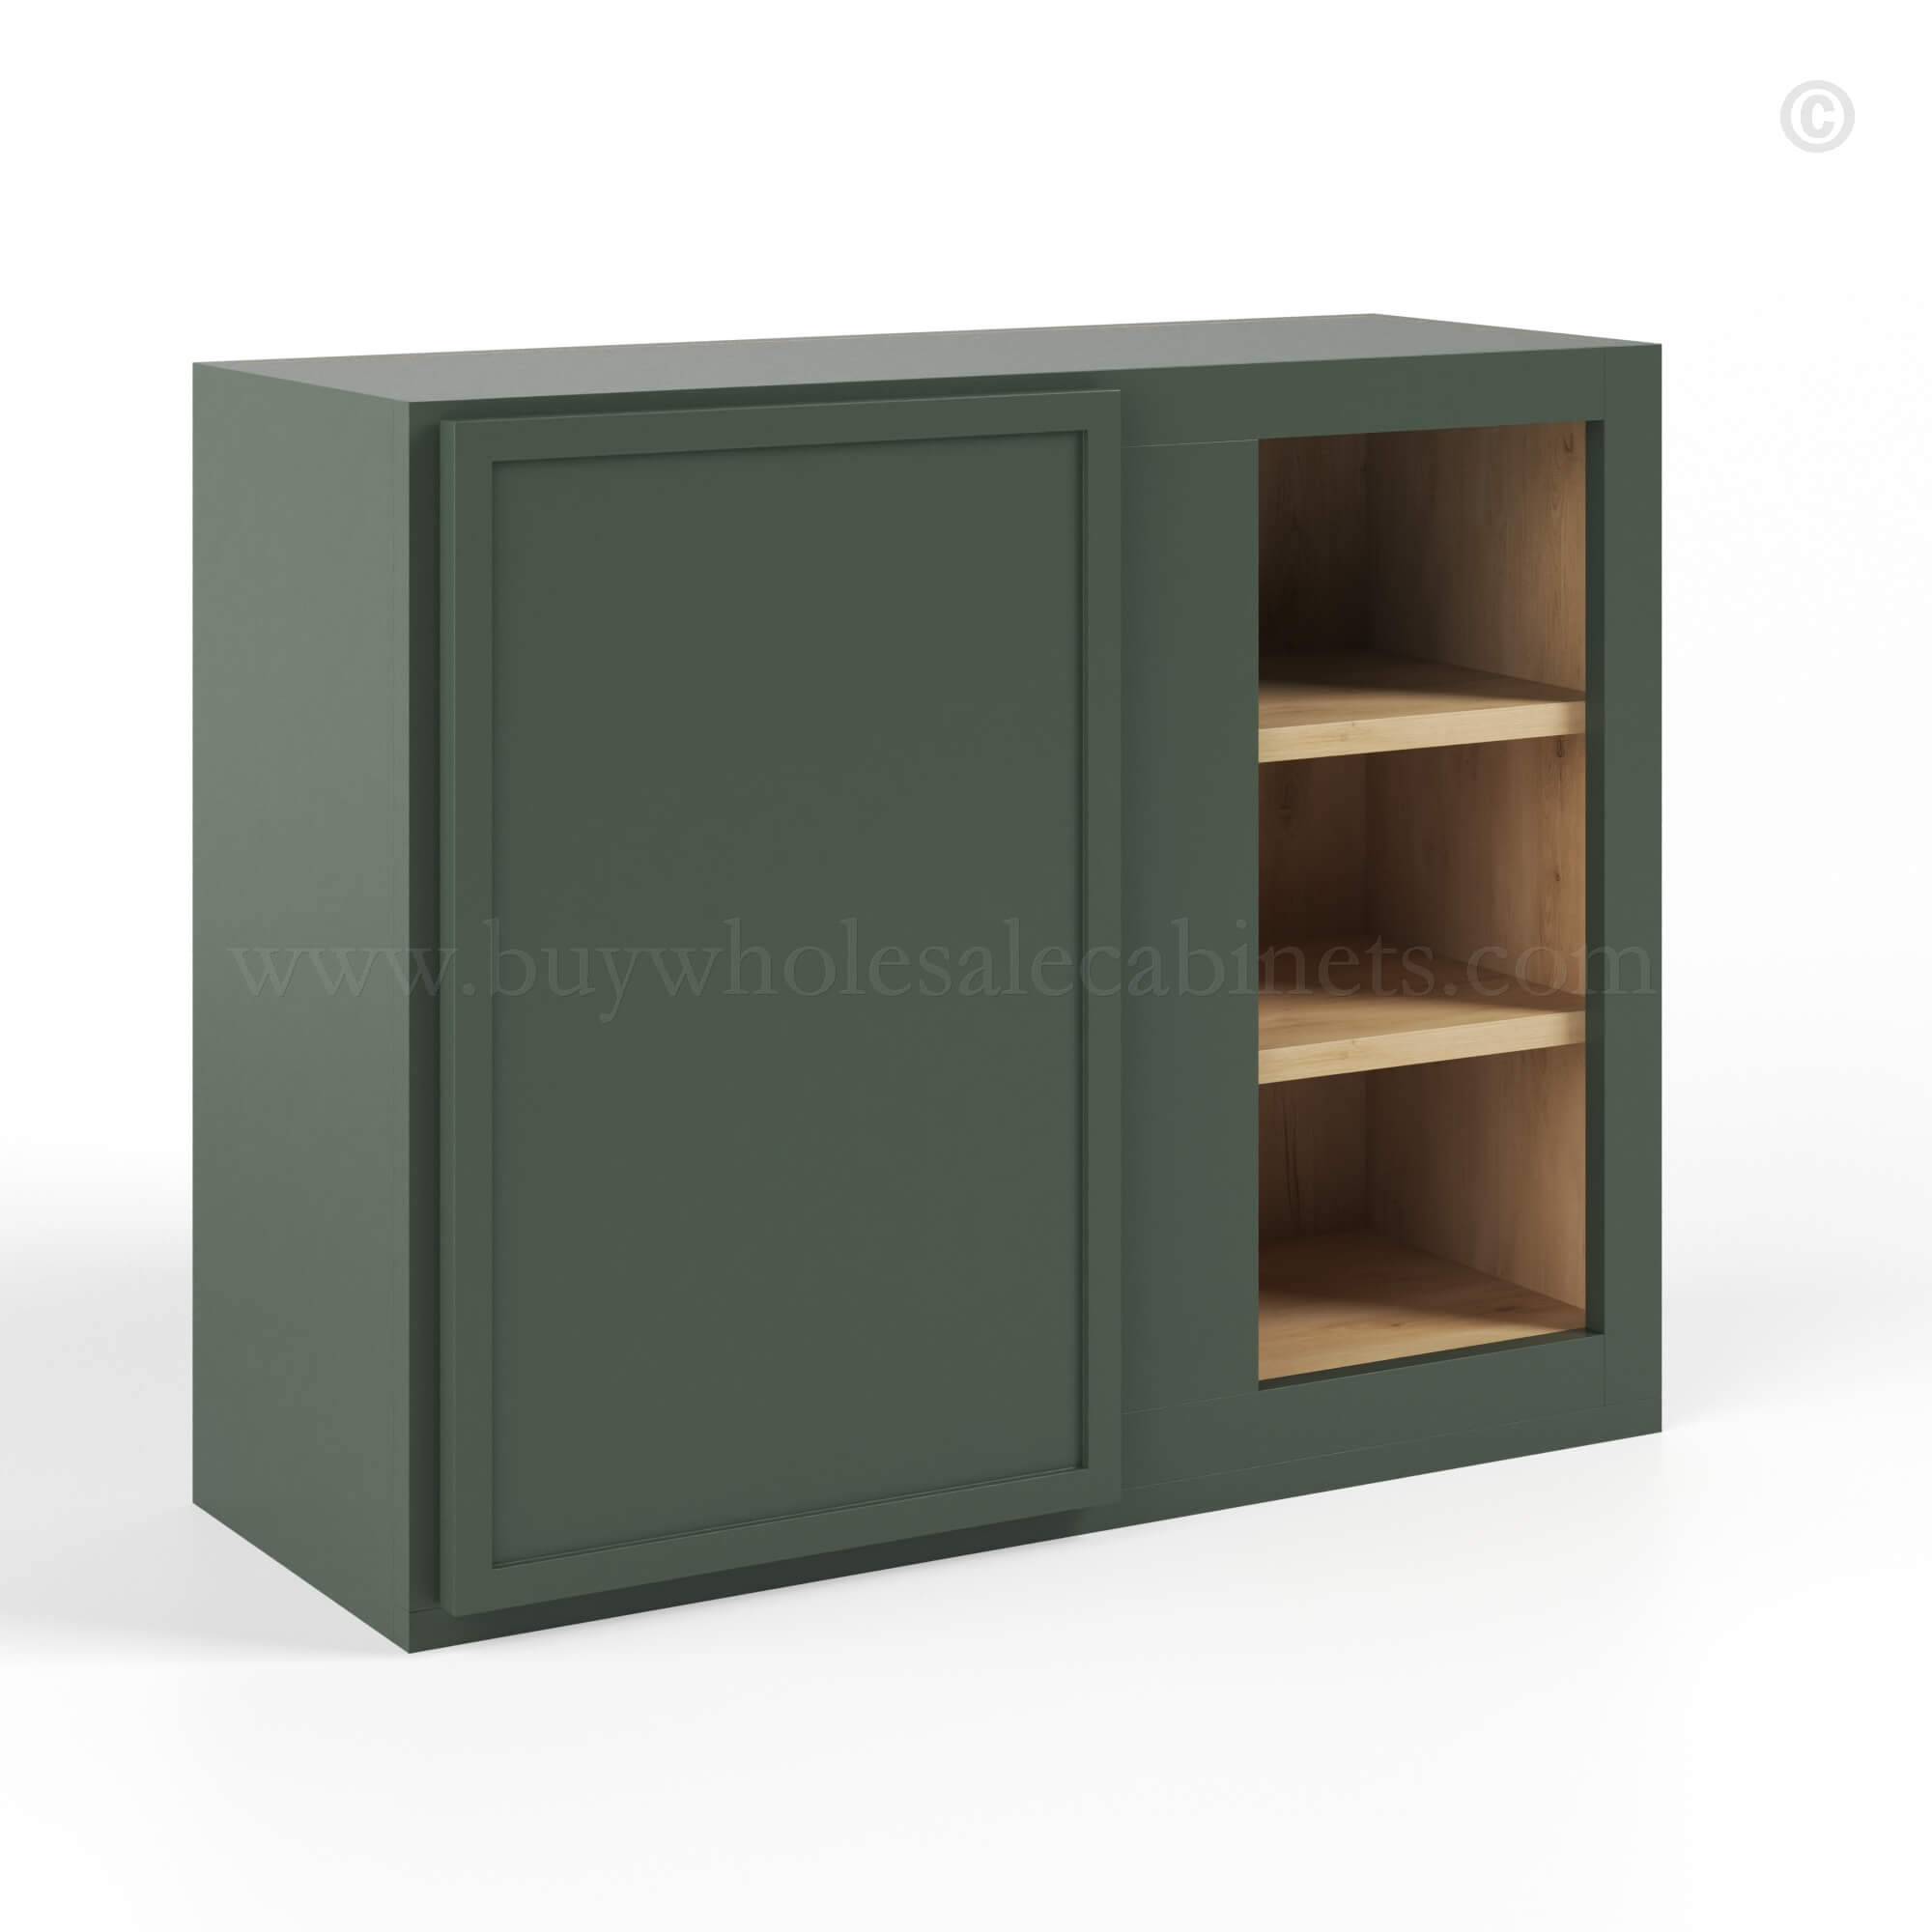 Slim Shaker Green Wall Blind Corner Cabinet, rta cabinets, wholesale cabinets